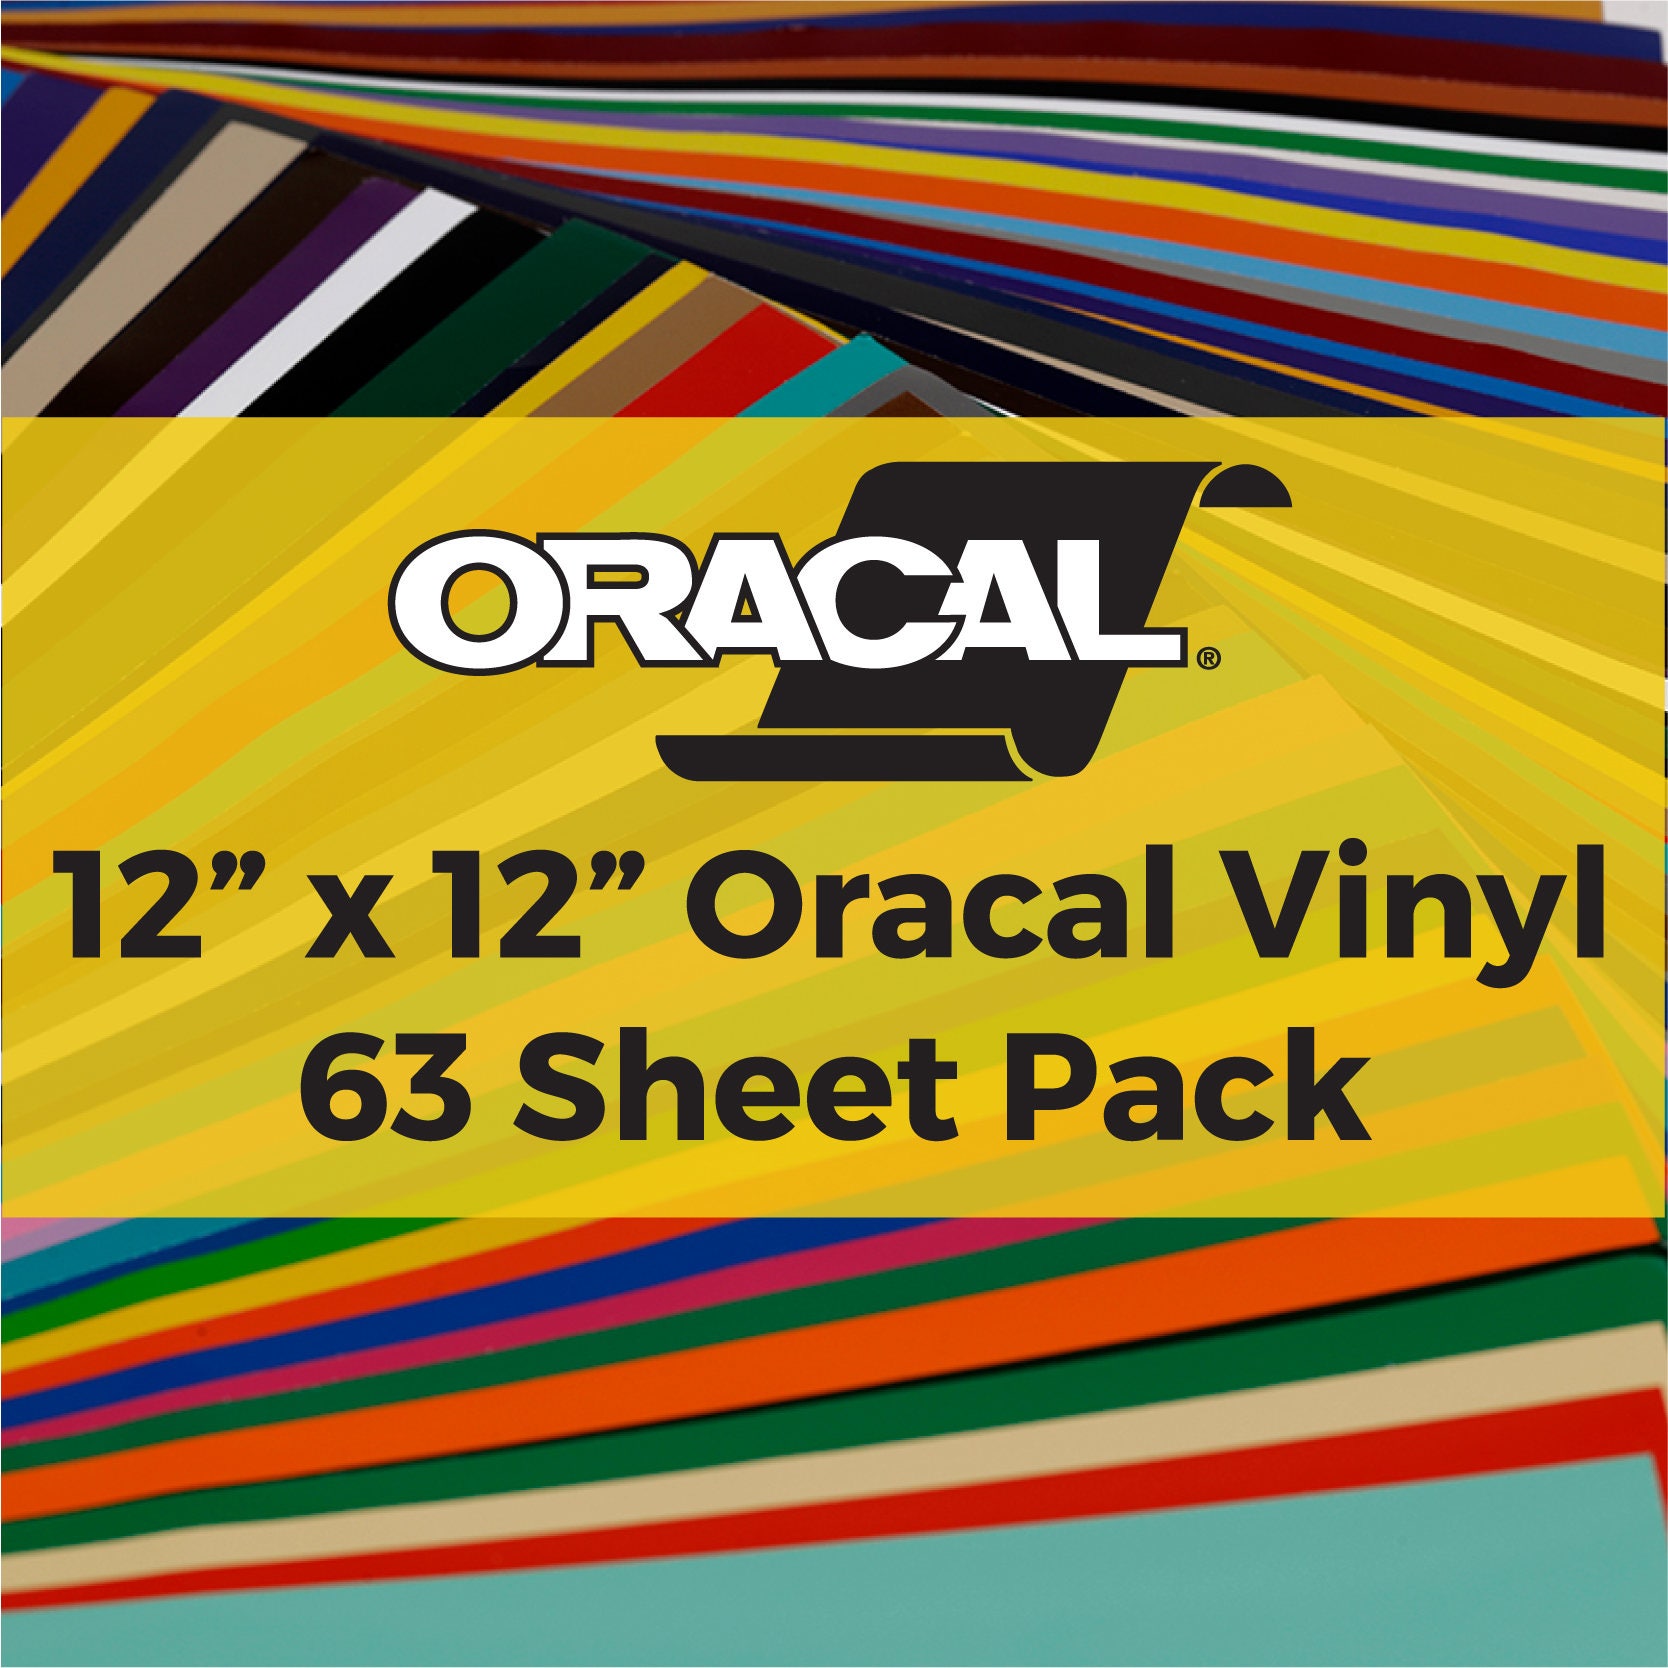 ORACAL 651 Gloss, Crafting Adhesive Vinyl - 12 x 10 Yards